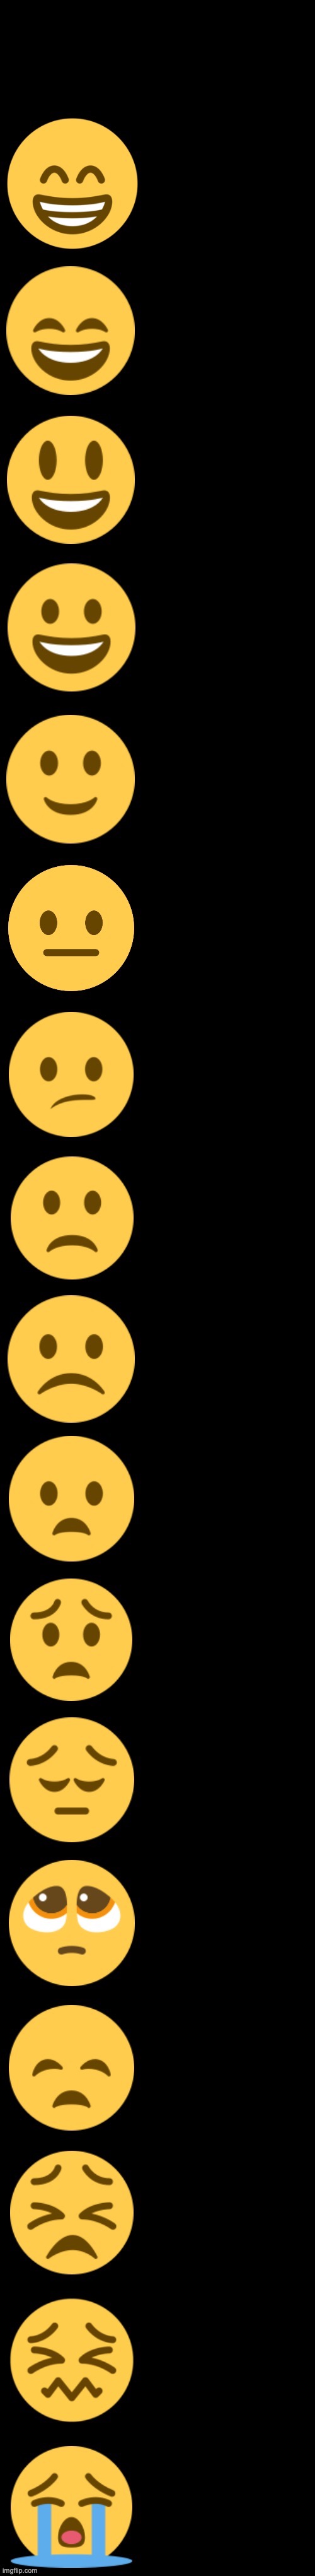 https://imgflip.com/memegenerator/434775346/Emoji-Becoming-Sad-Extended | image tagged in emoji becoming sad extended,emoji | made w/ Imgflip meme maker